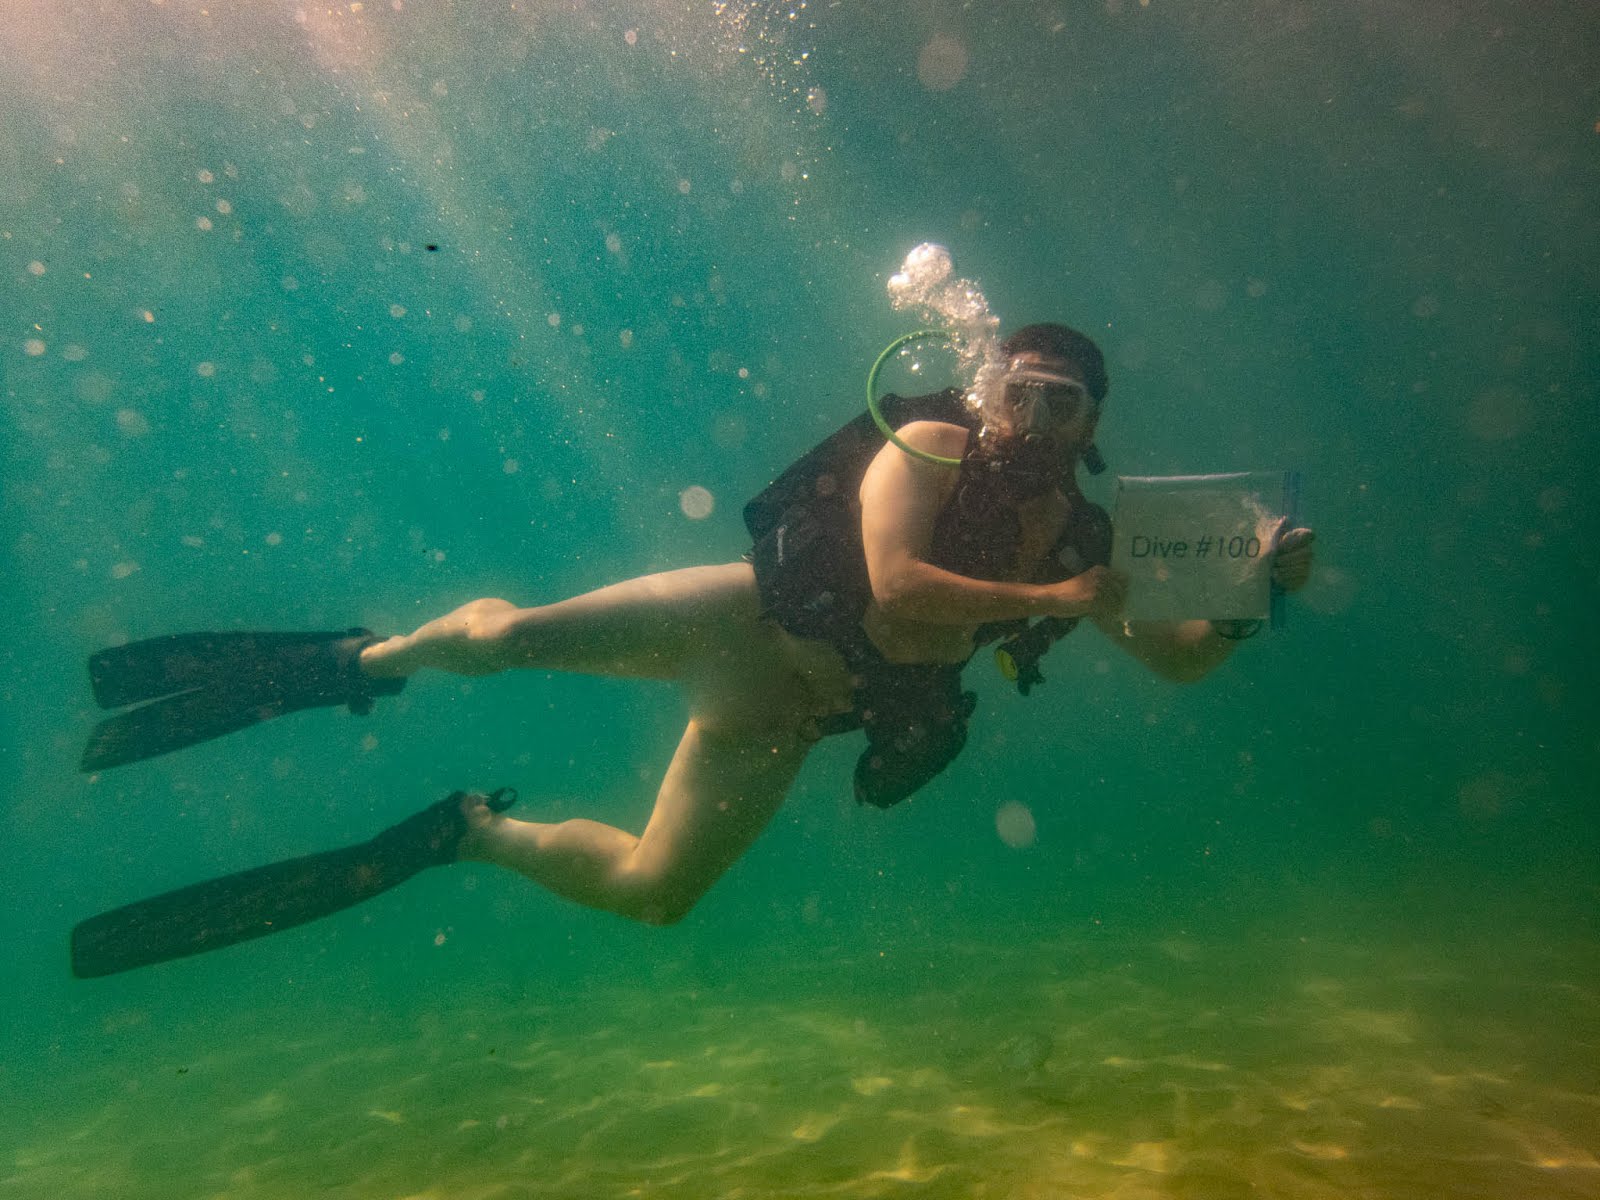 blaine stevenson recommends naked women scuba diving pic